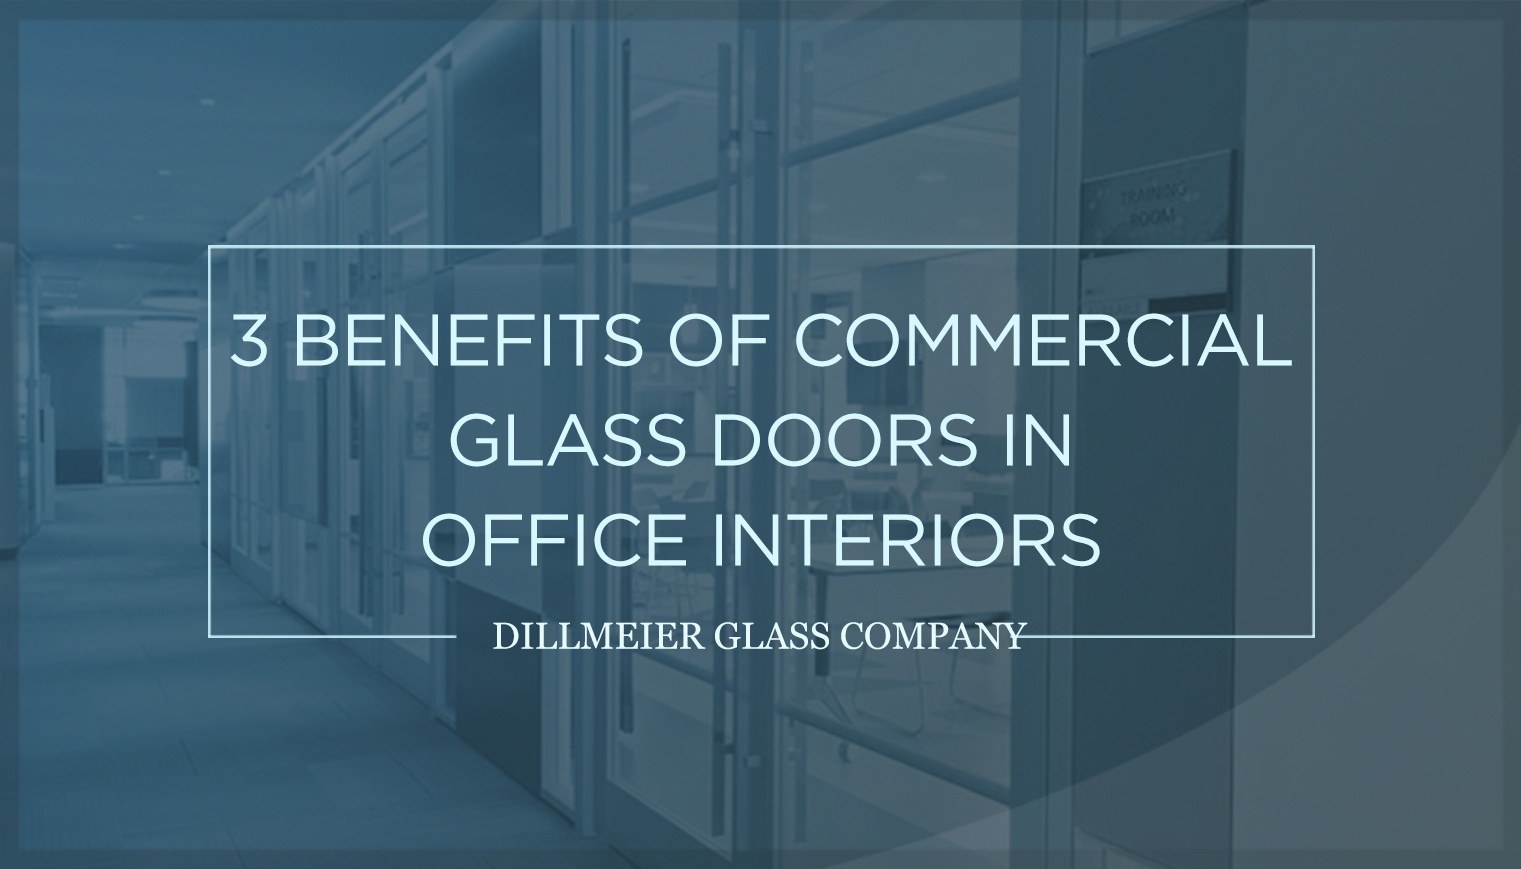 3 Benefits Of Commercial Glass Doors In Office Interiors